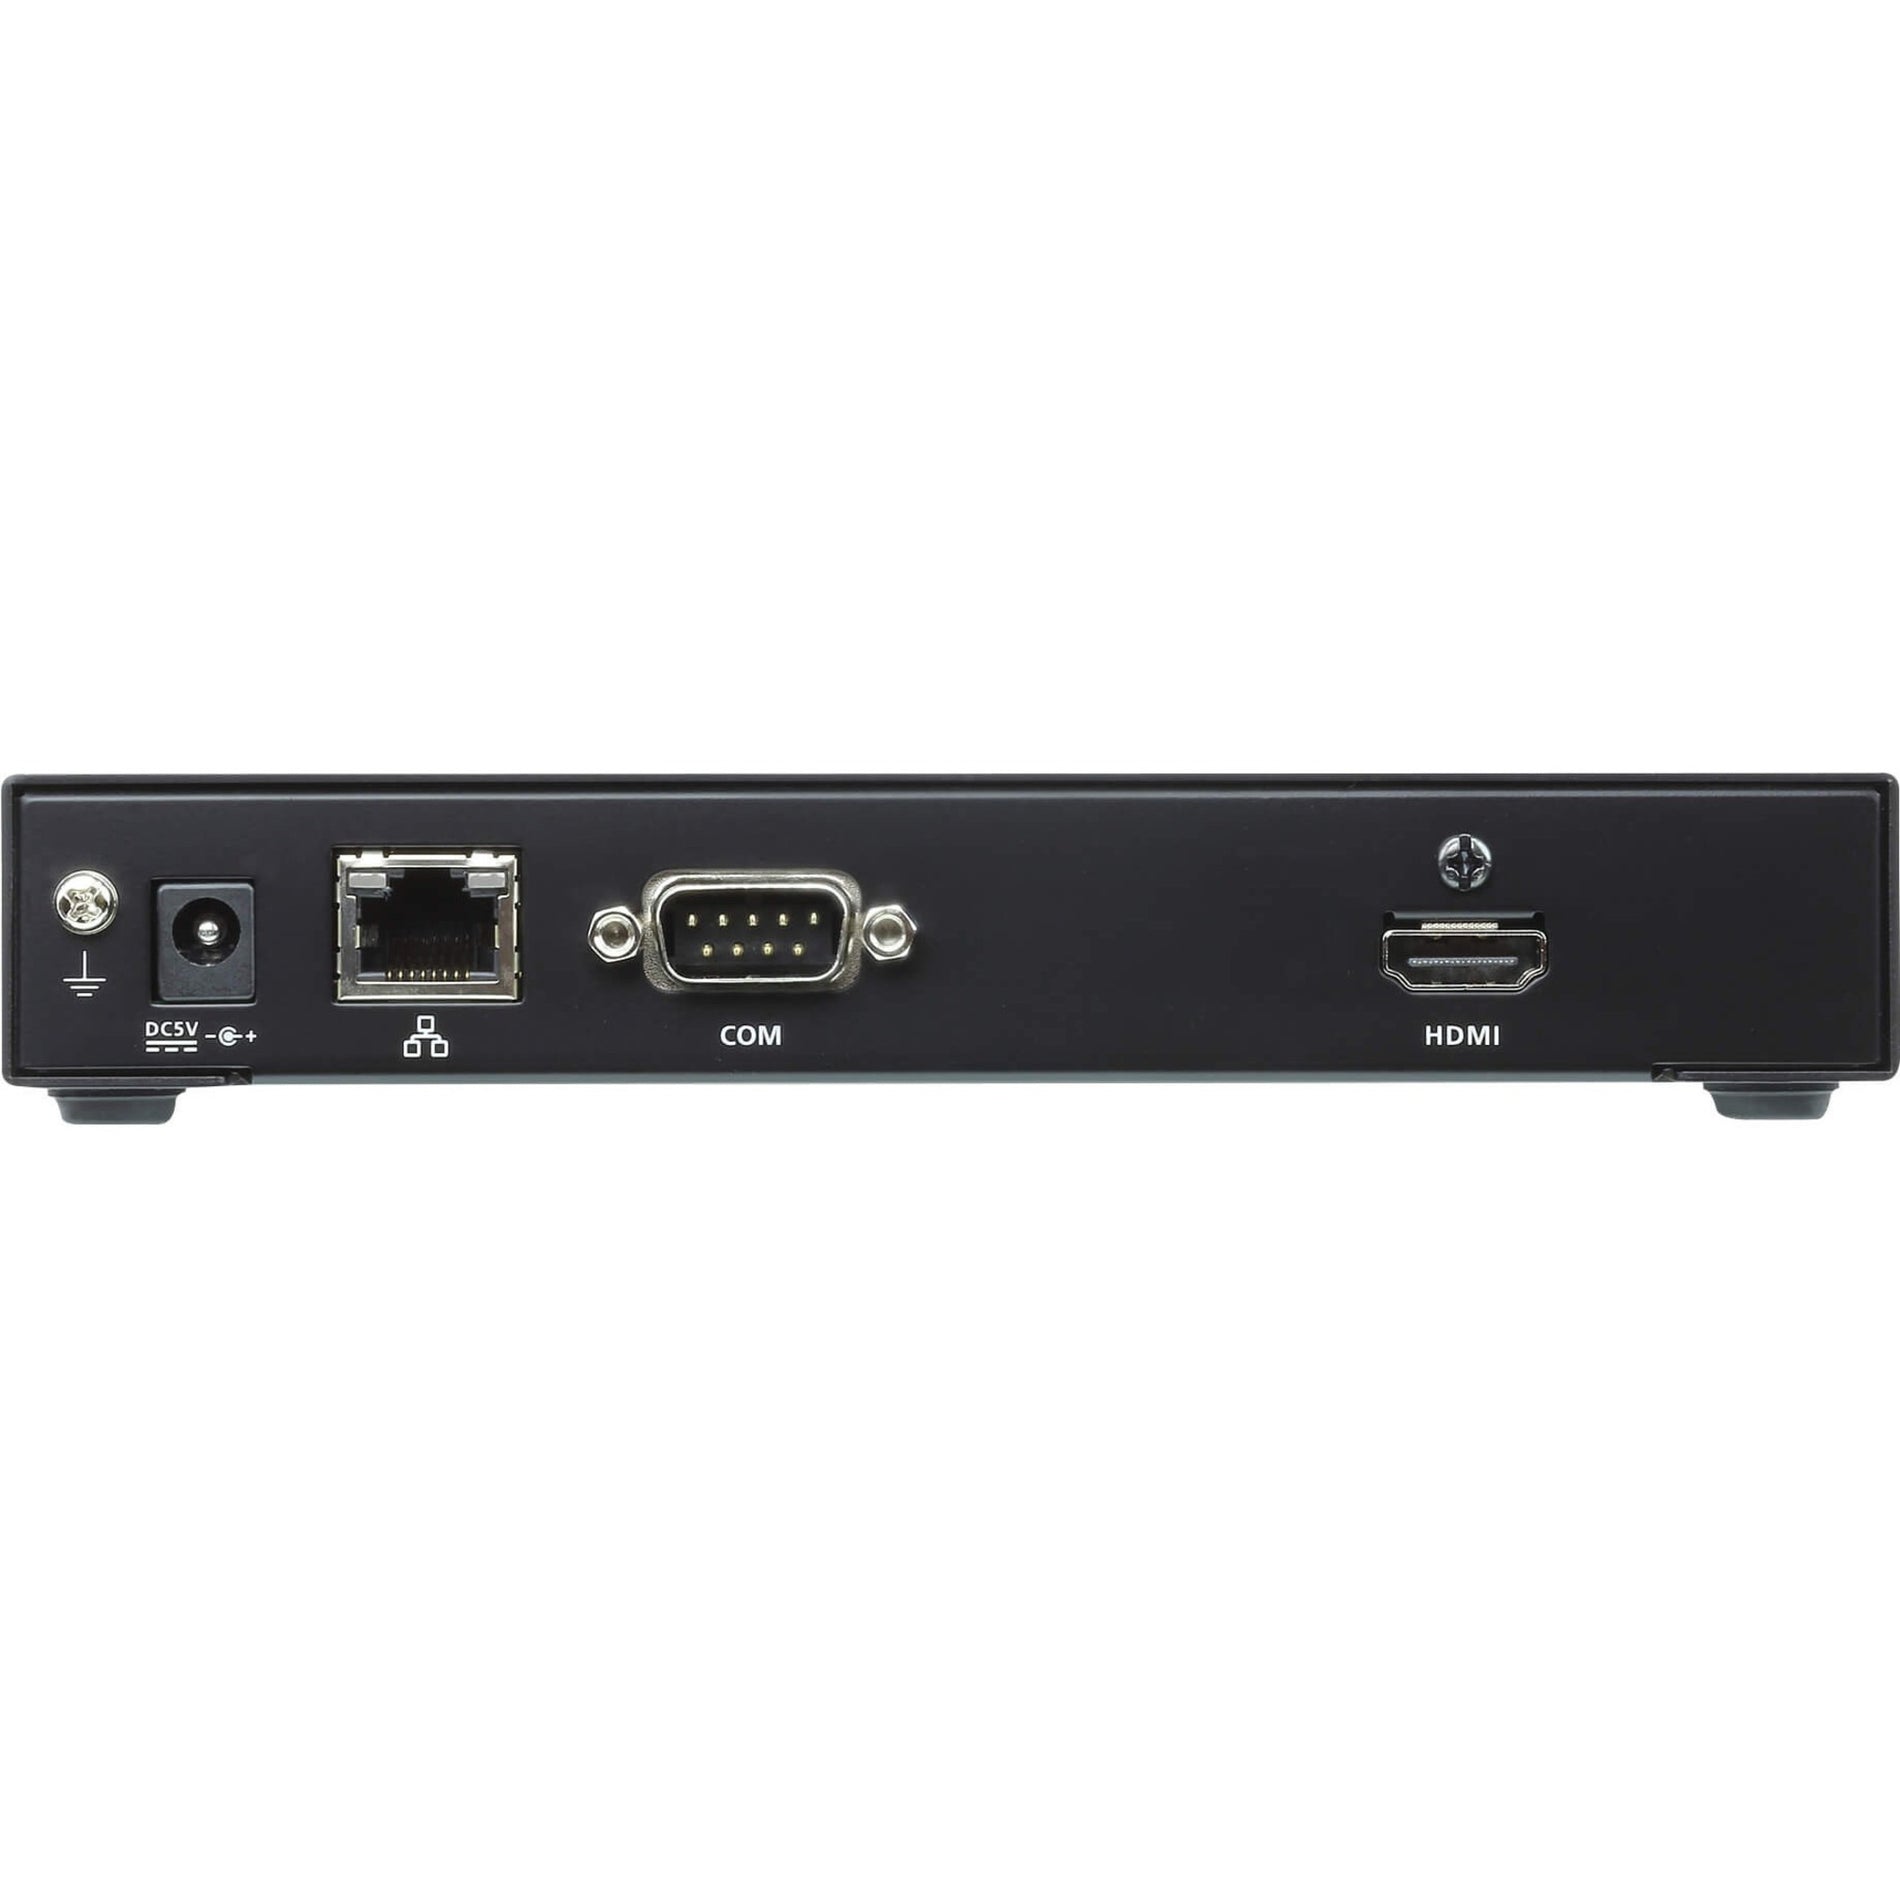 ATEN HDMI KVM over IP Console Station - TAA Compliant (KA8280)